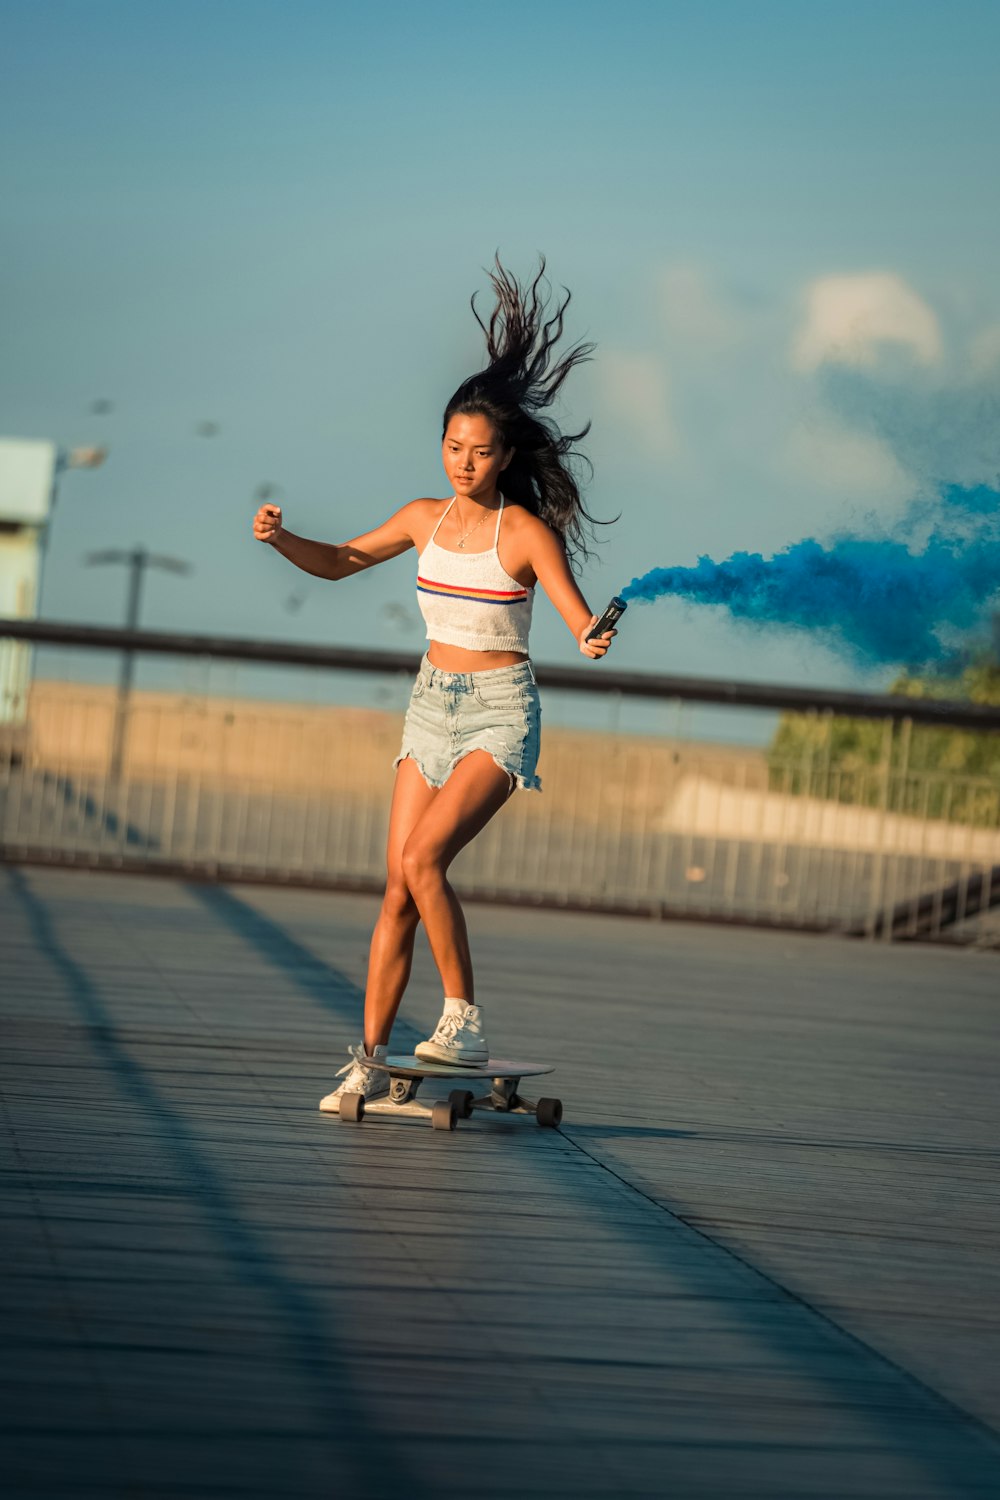 a young girl riding a skateboard down a sidewalk